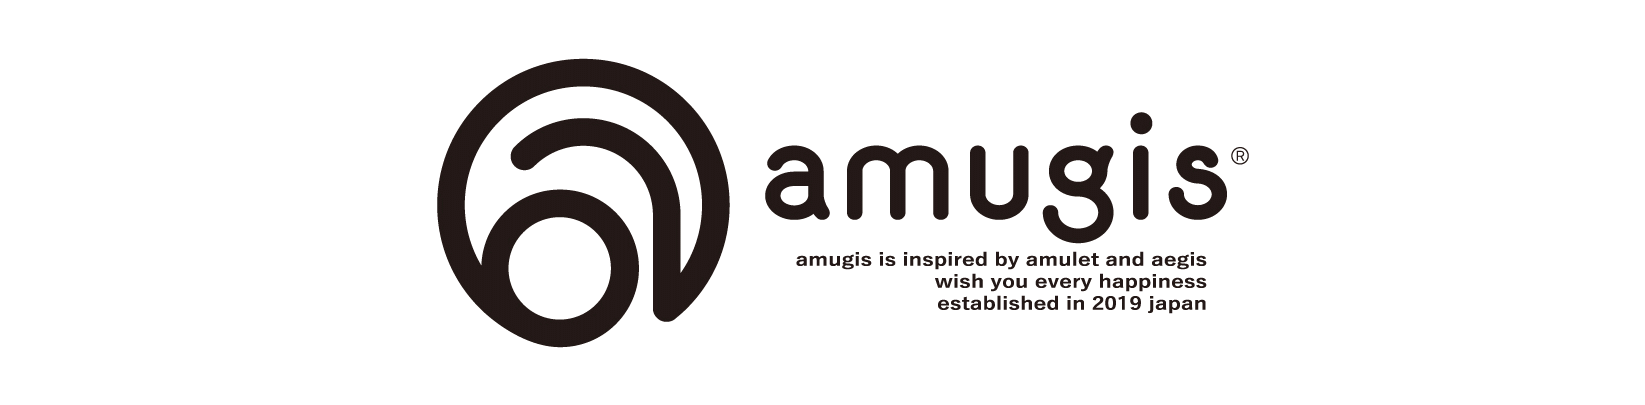 amugis official